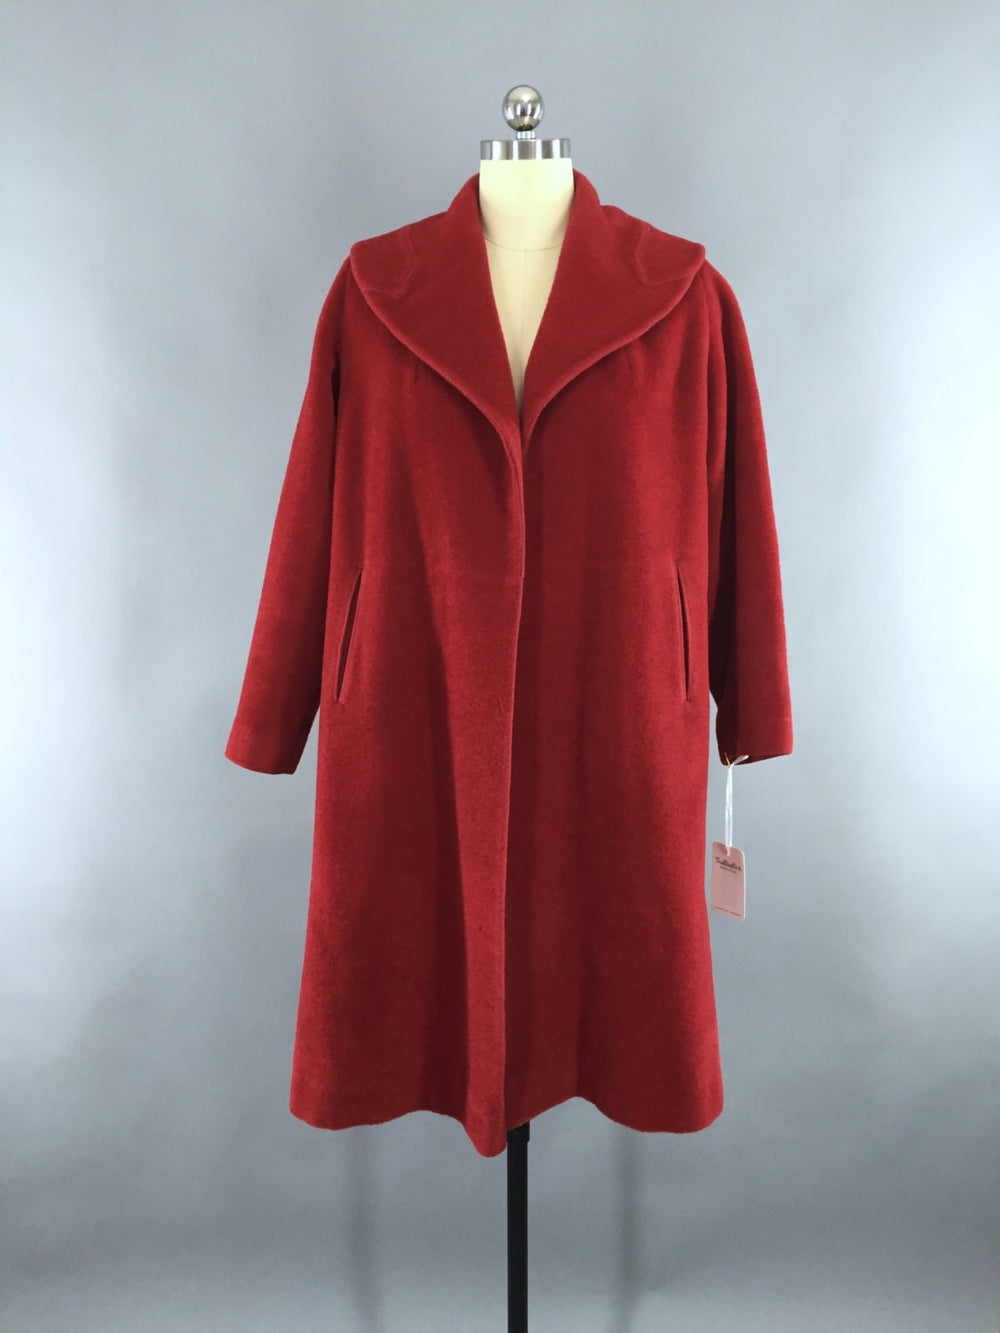 Vintage 1950s Red Charmosa Wool New Look Swing Coat